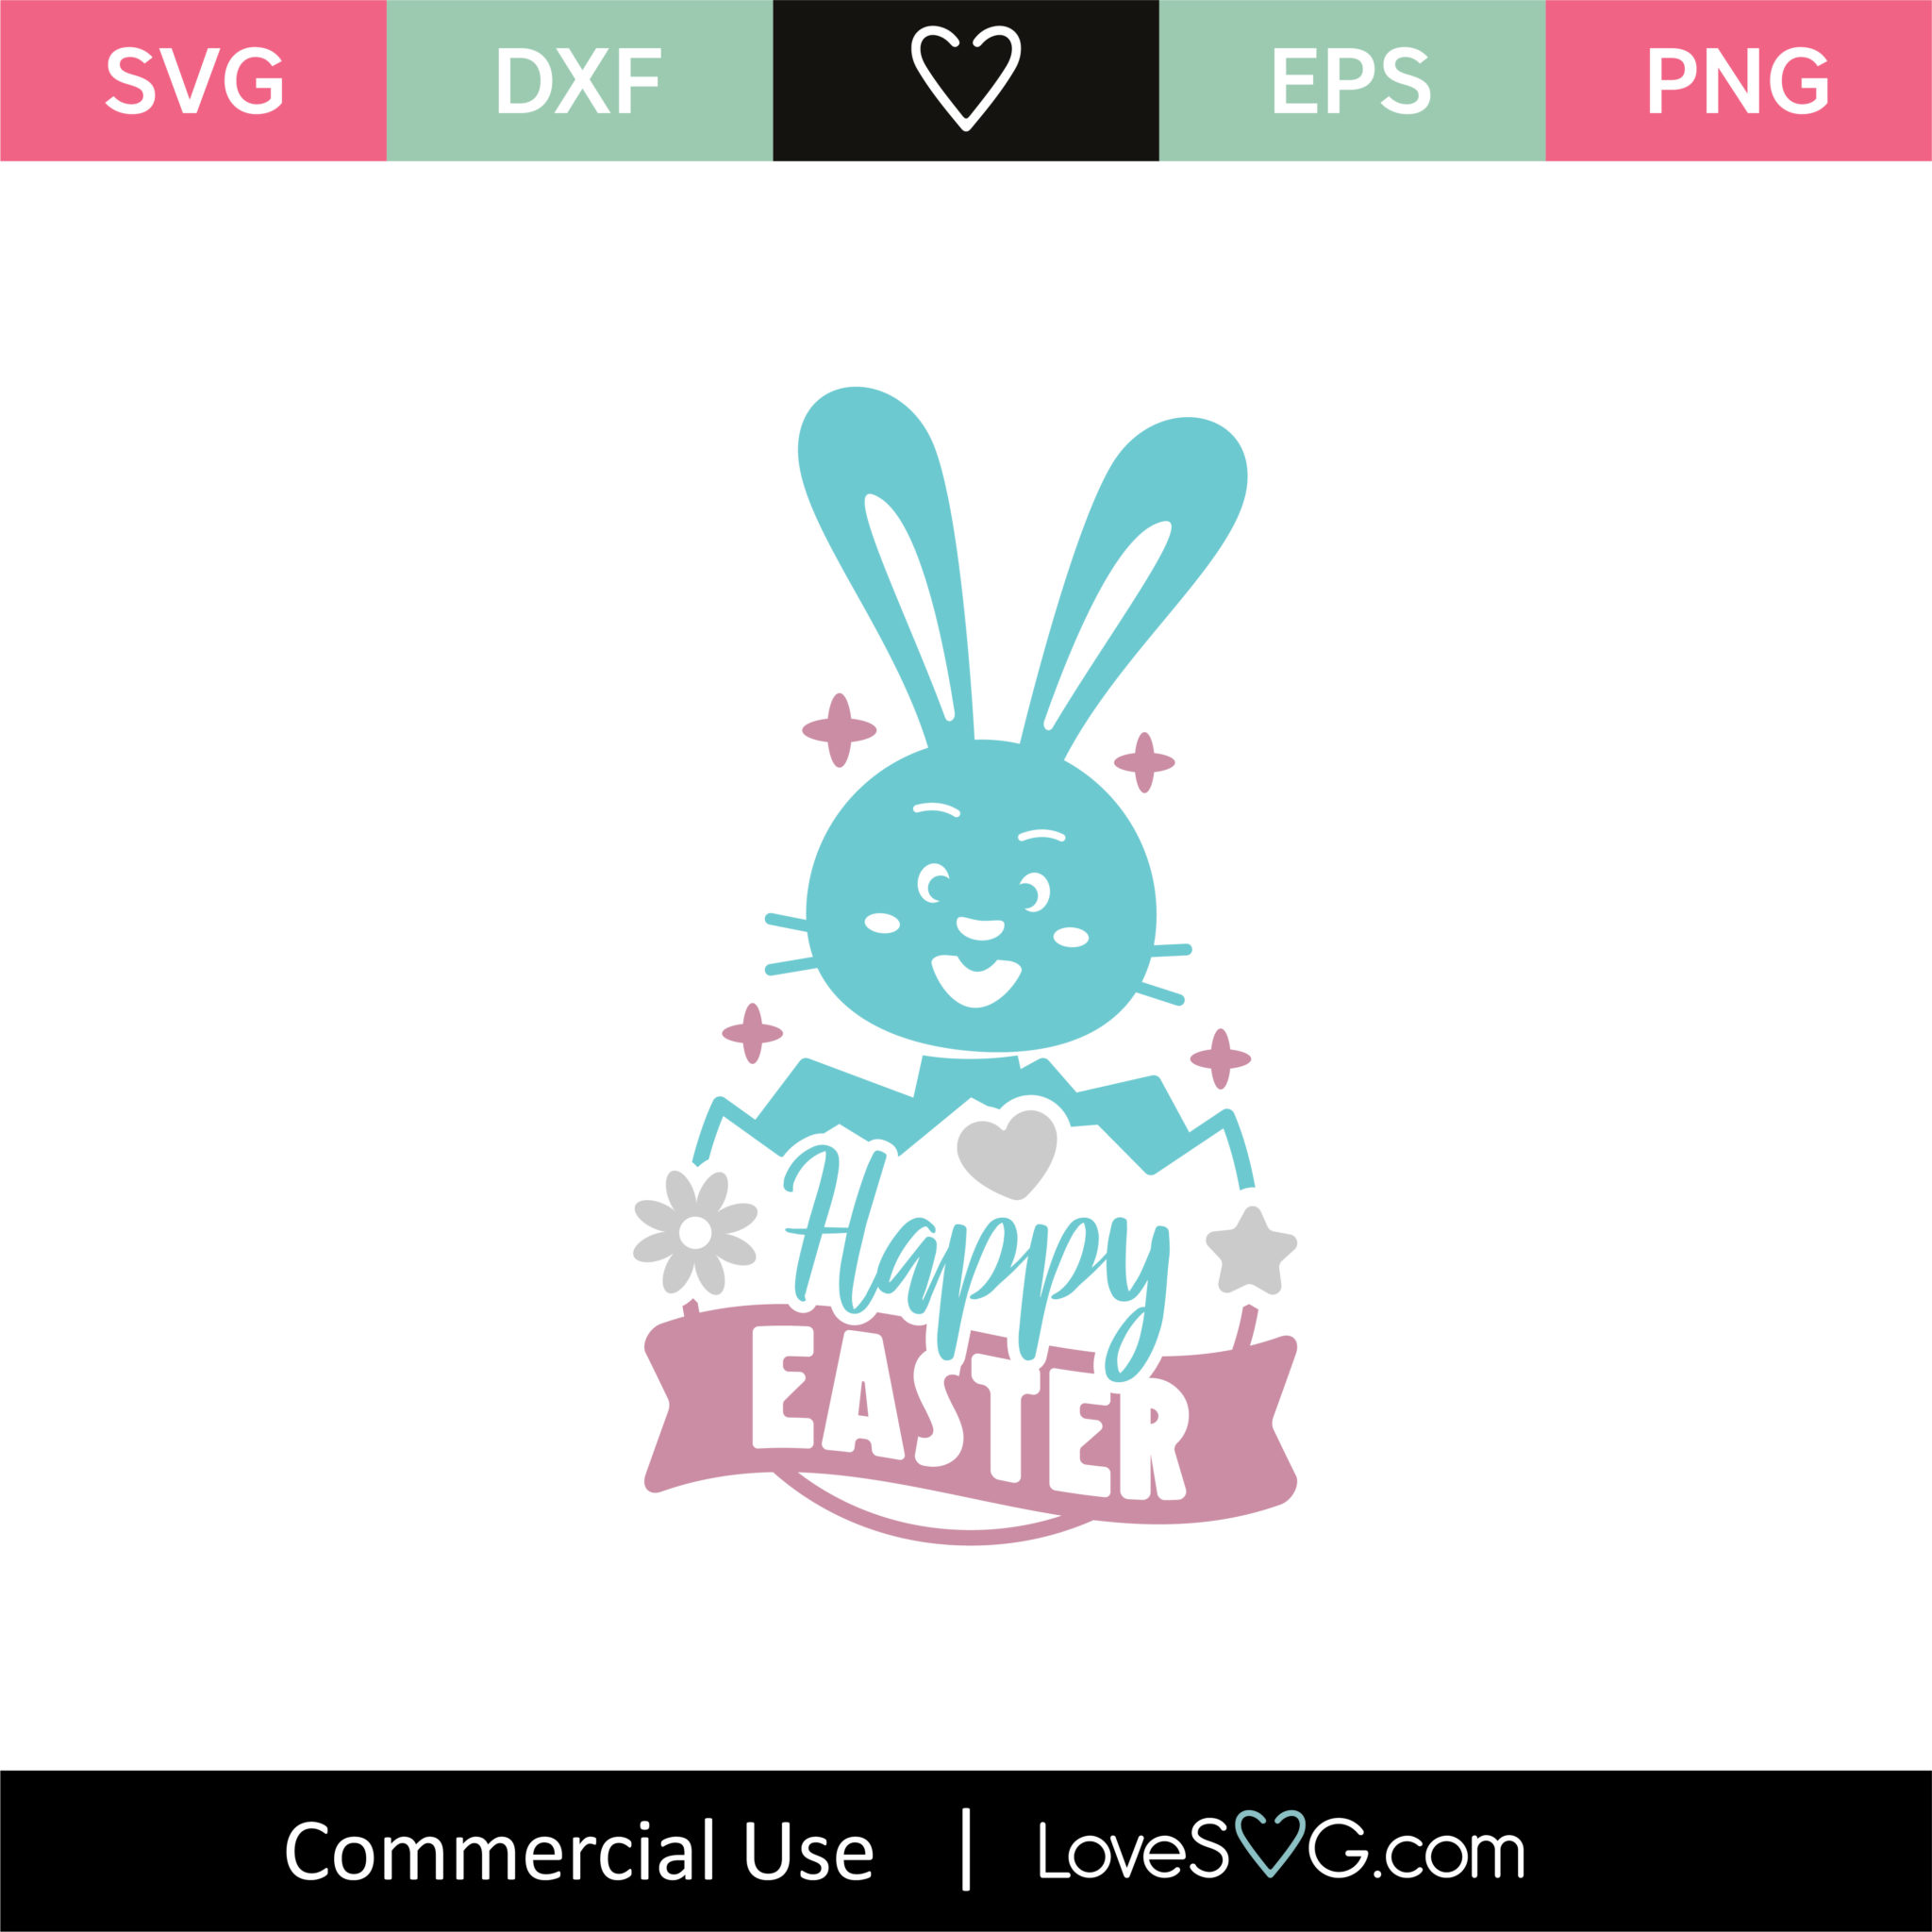 Happy Easter SVG Cut File - Lovesvg.com